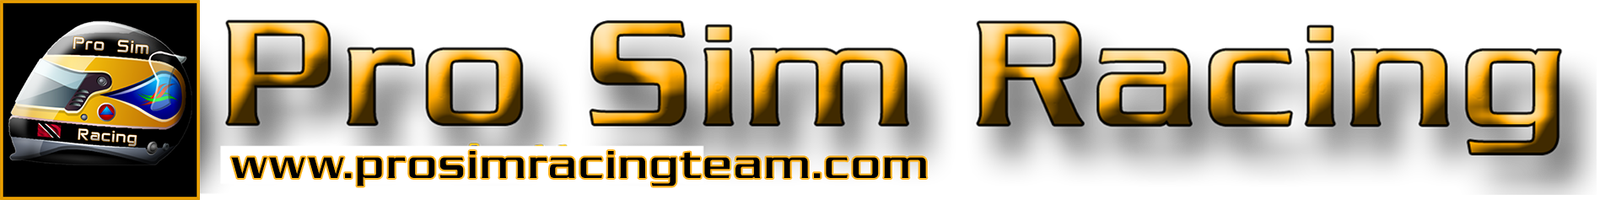 Pro Sim Racing Team Main Logo Large